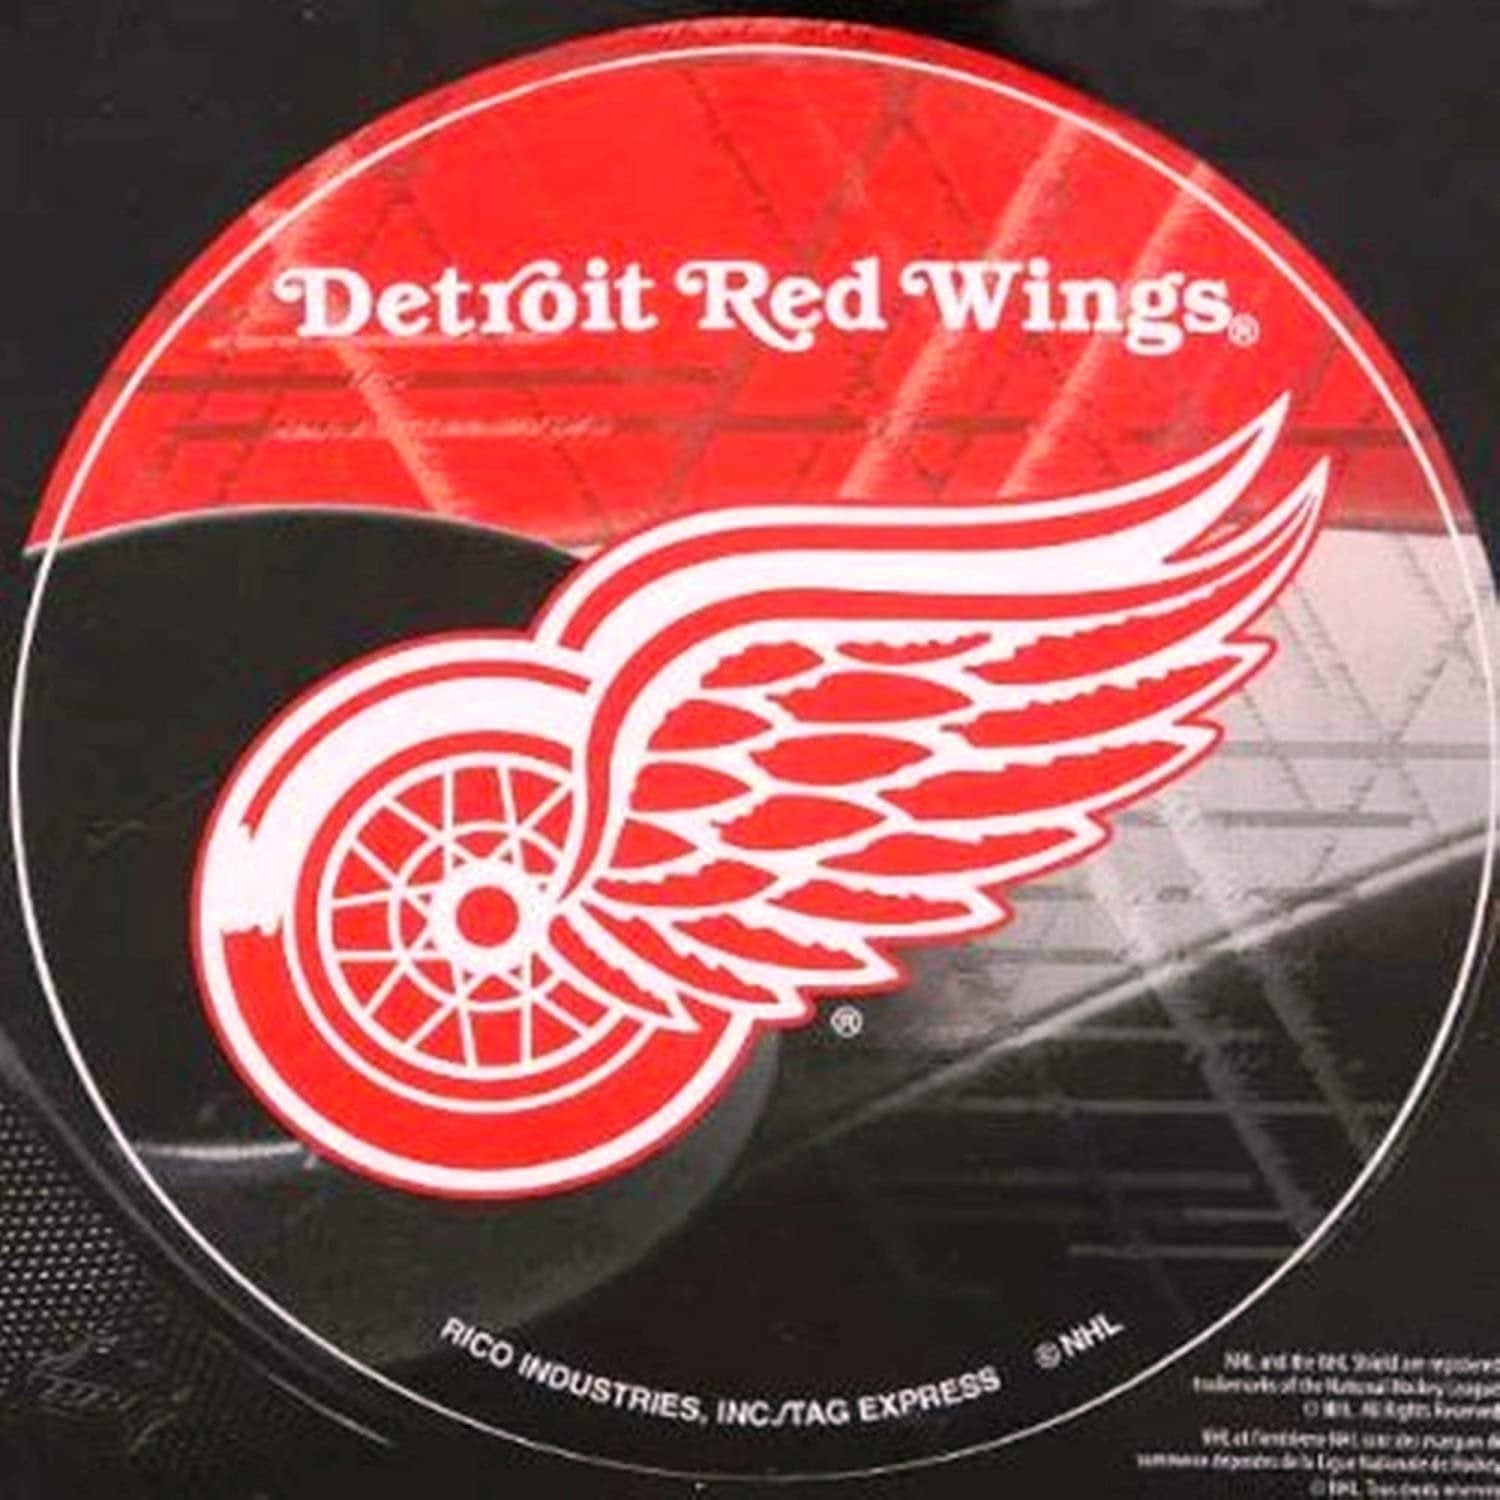 Detroit Red Wings Decal 4" Round Vinyl Auto Home Window Bumper Sticker Hockey